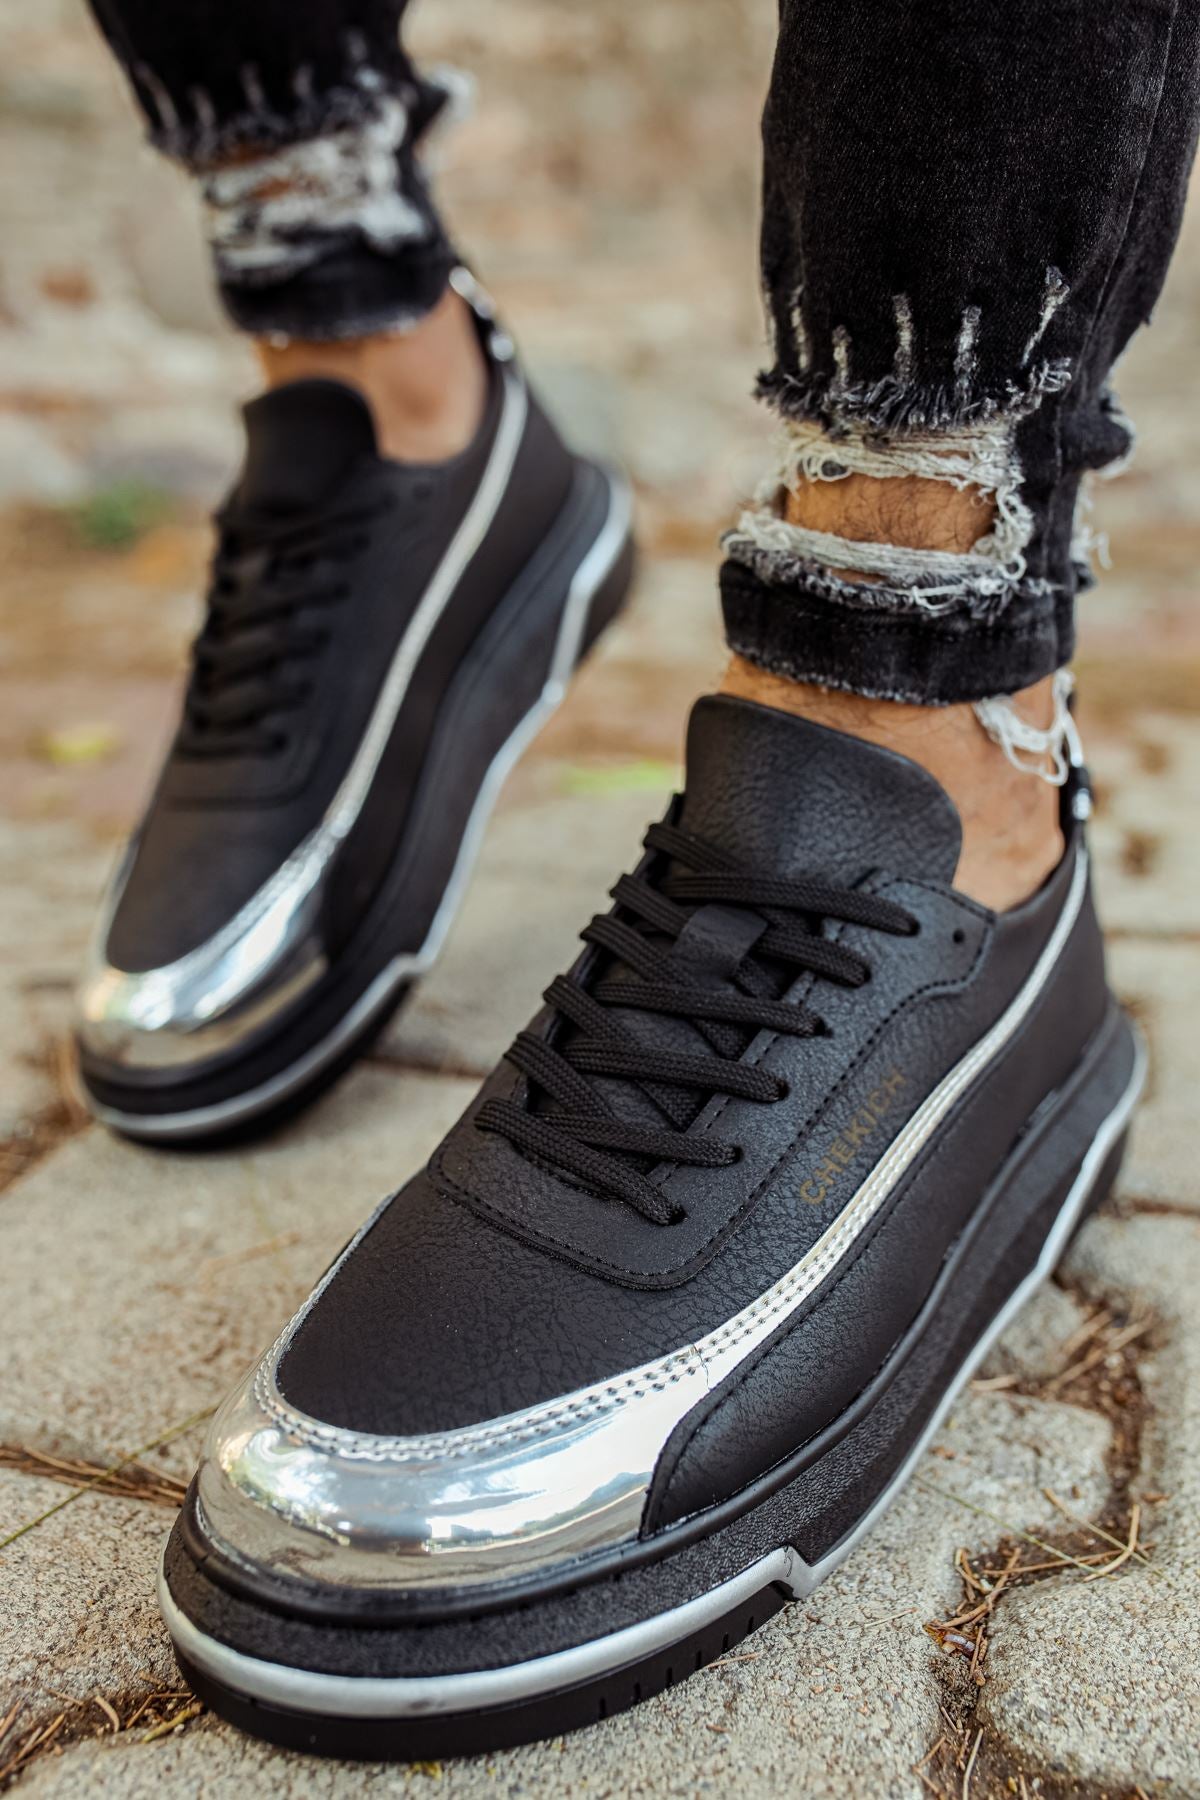 CH041 ST Men's Sneaker Shoes BLACK / SILVER - STREETMODE ™